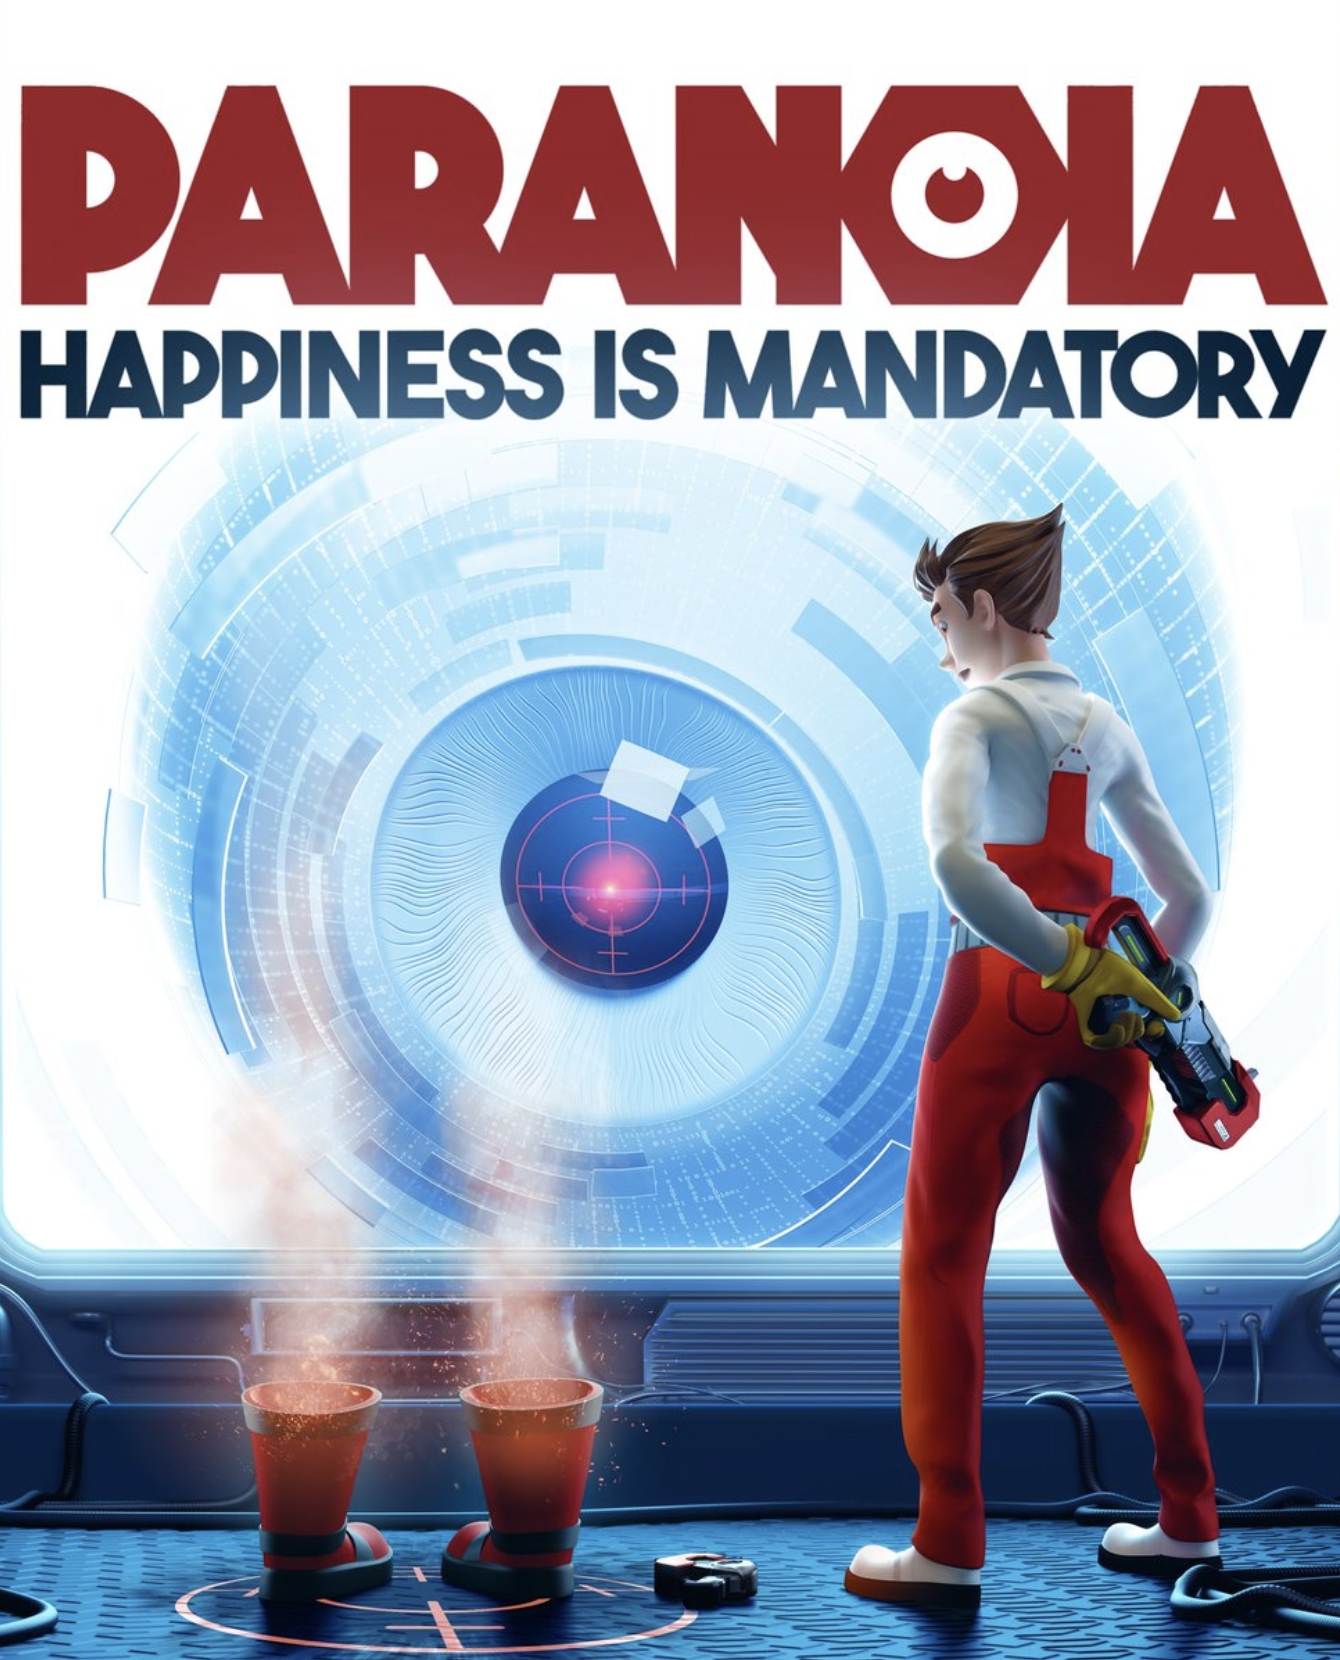 Paranoia XP logo and header image